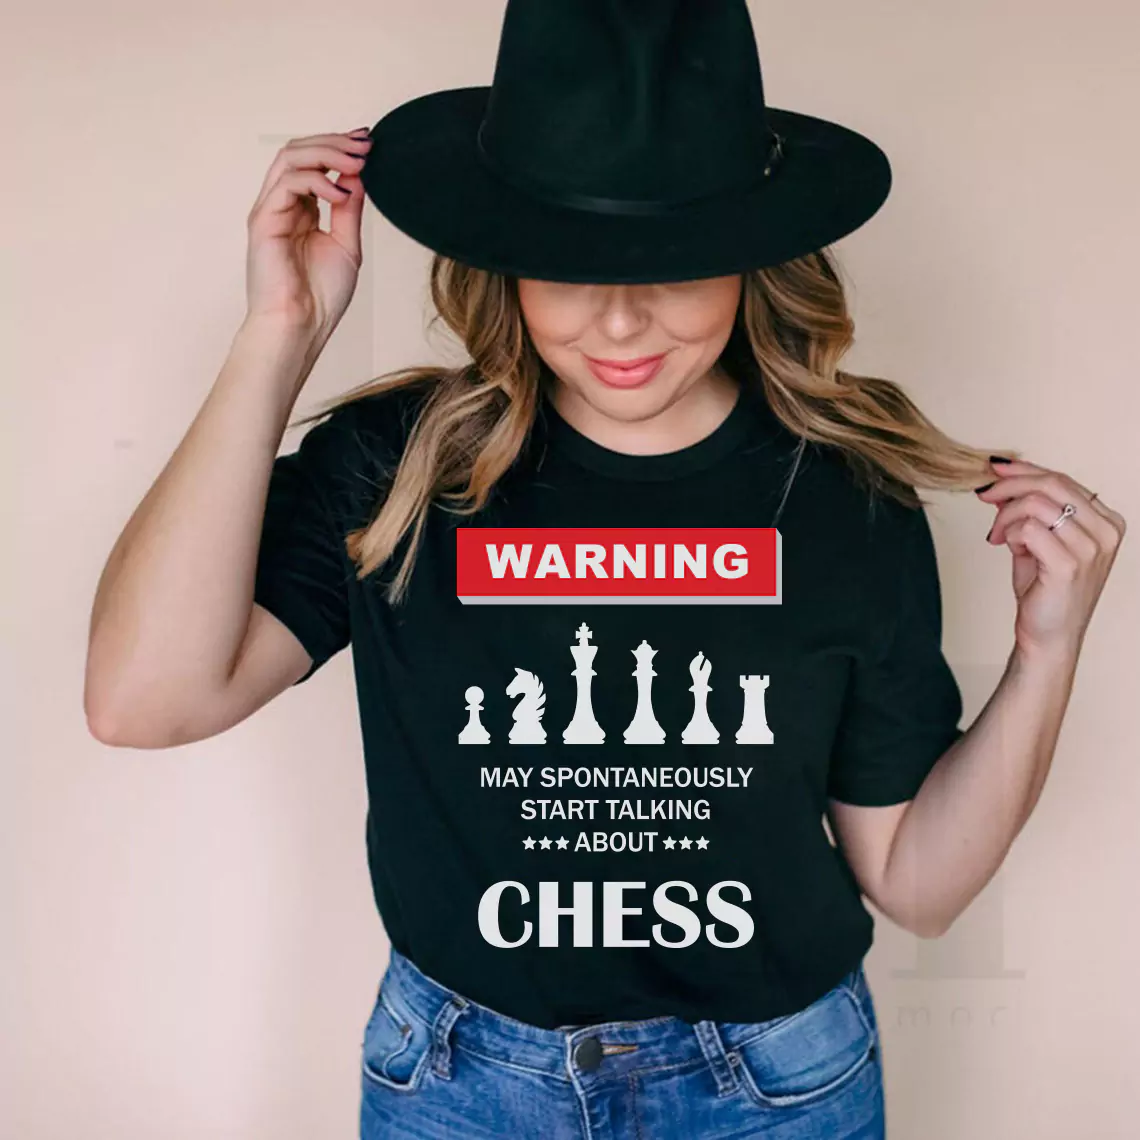 chess girl wearing Warning may spontaneously start talking about chess shirt